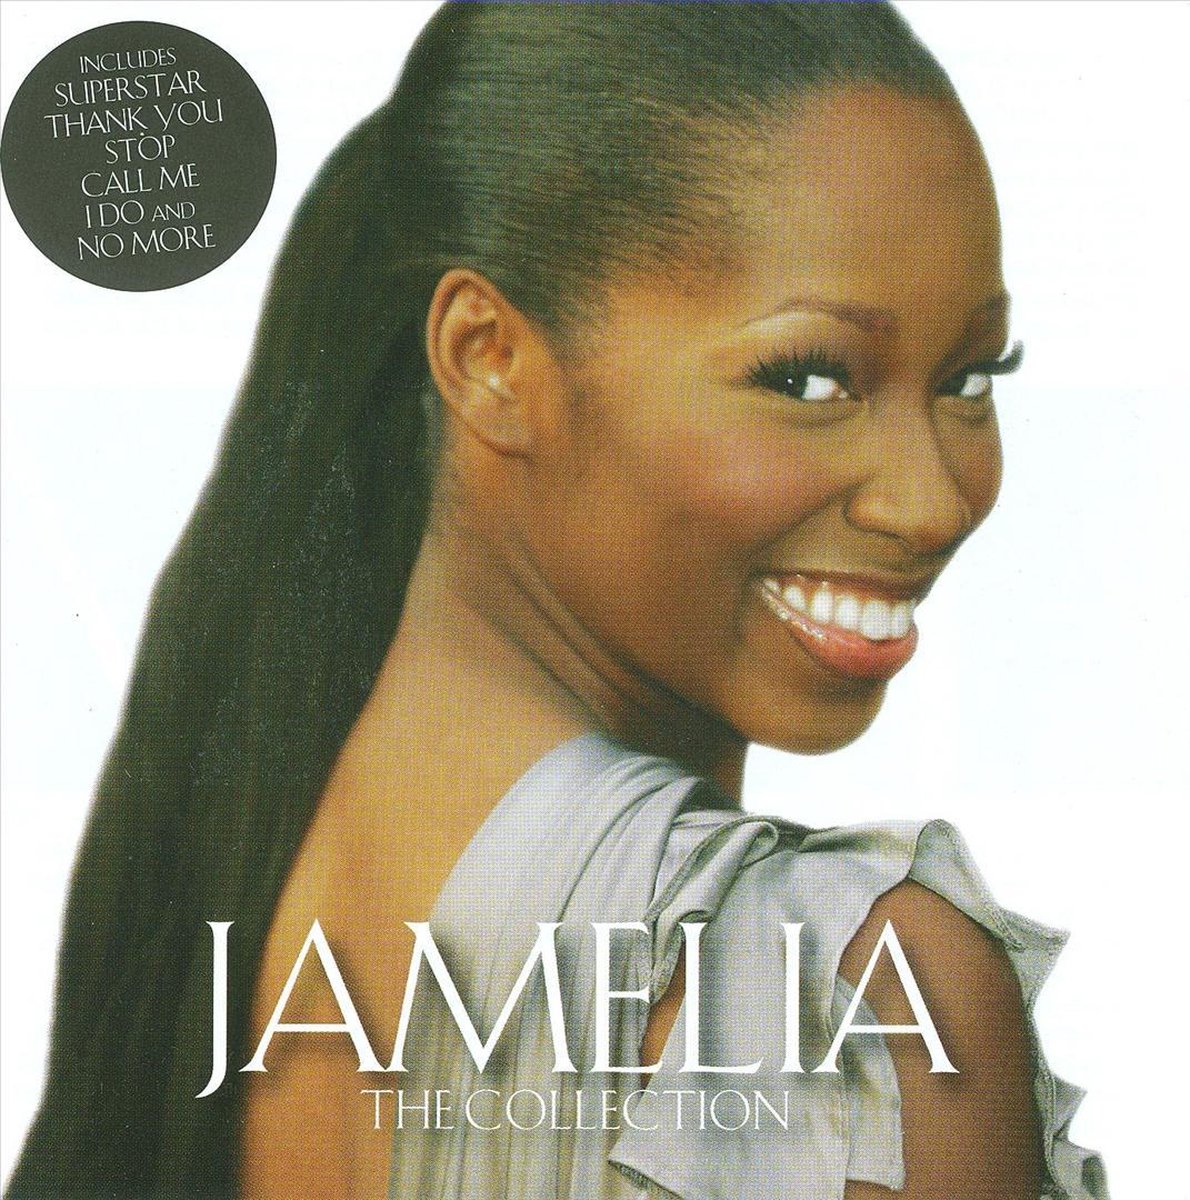 The Collection - Jamelia